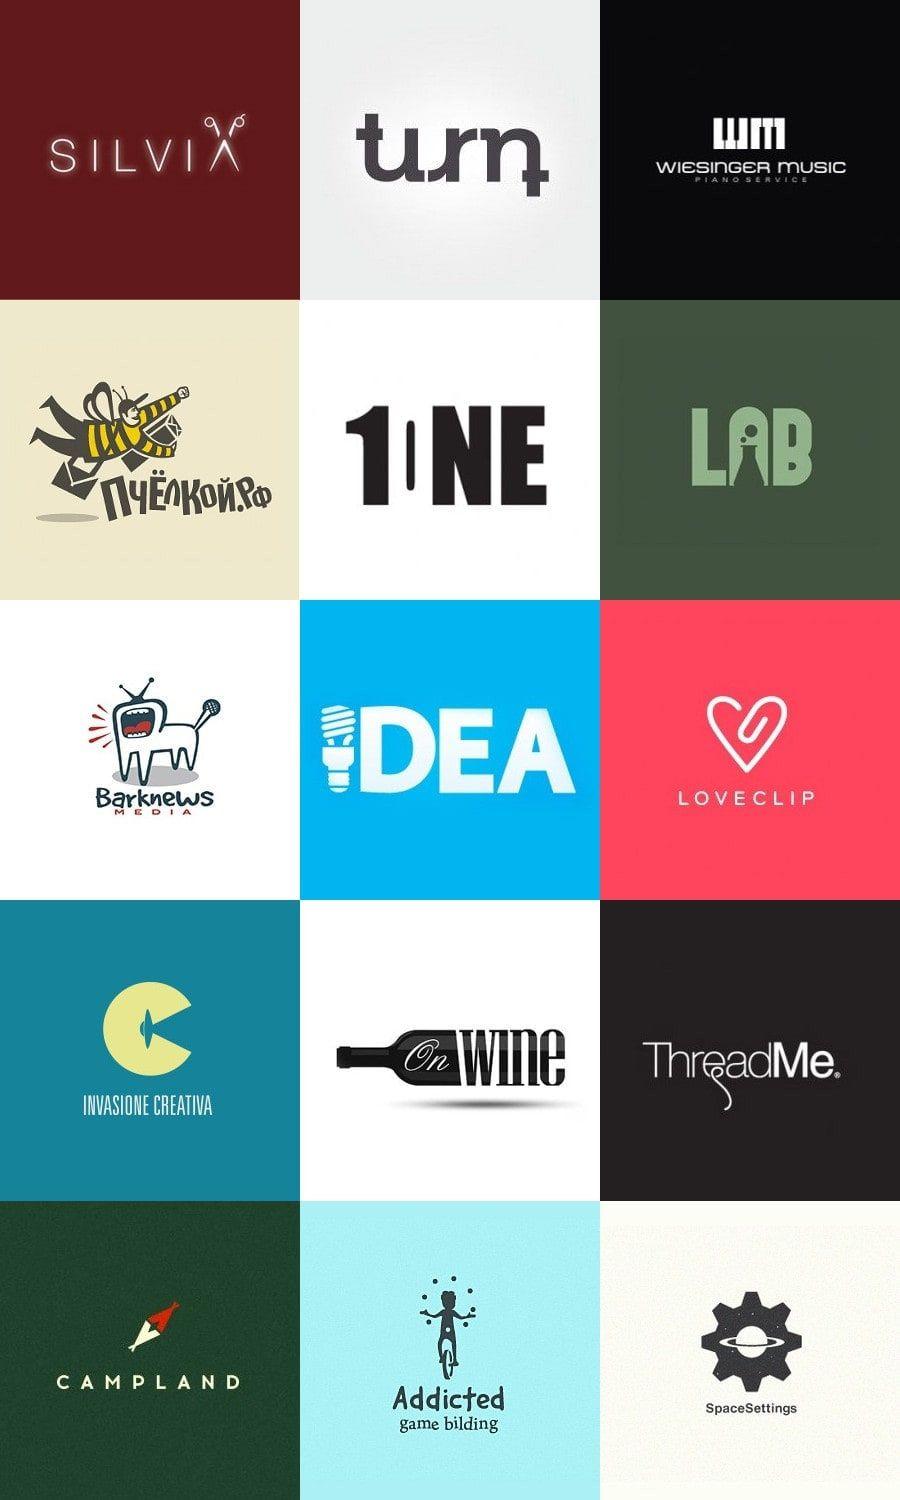 About.me Cool Logo - 45 Logo Design Ideas for Inspiration | Logaster